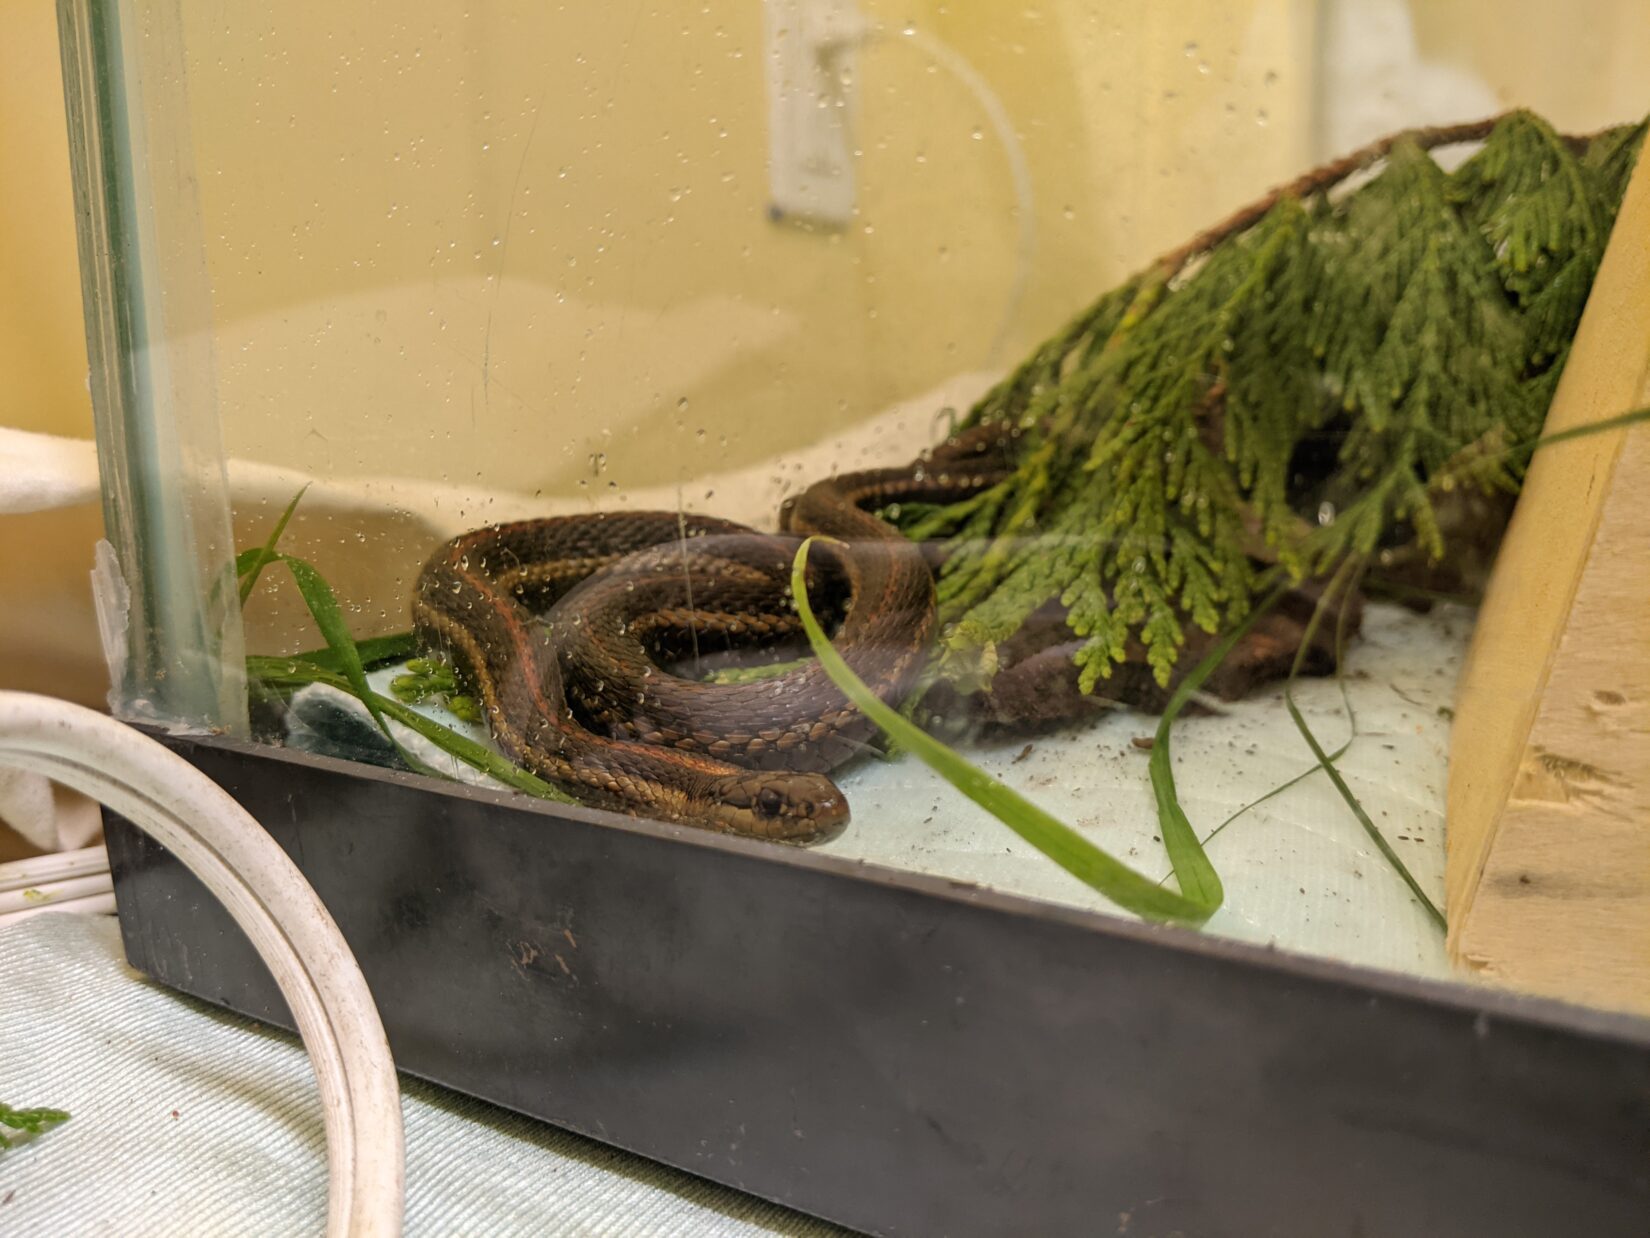 Northwester garter snake in care at Wild ARC